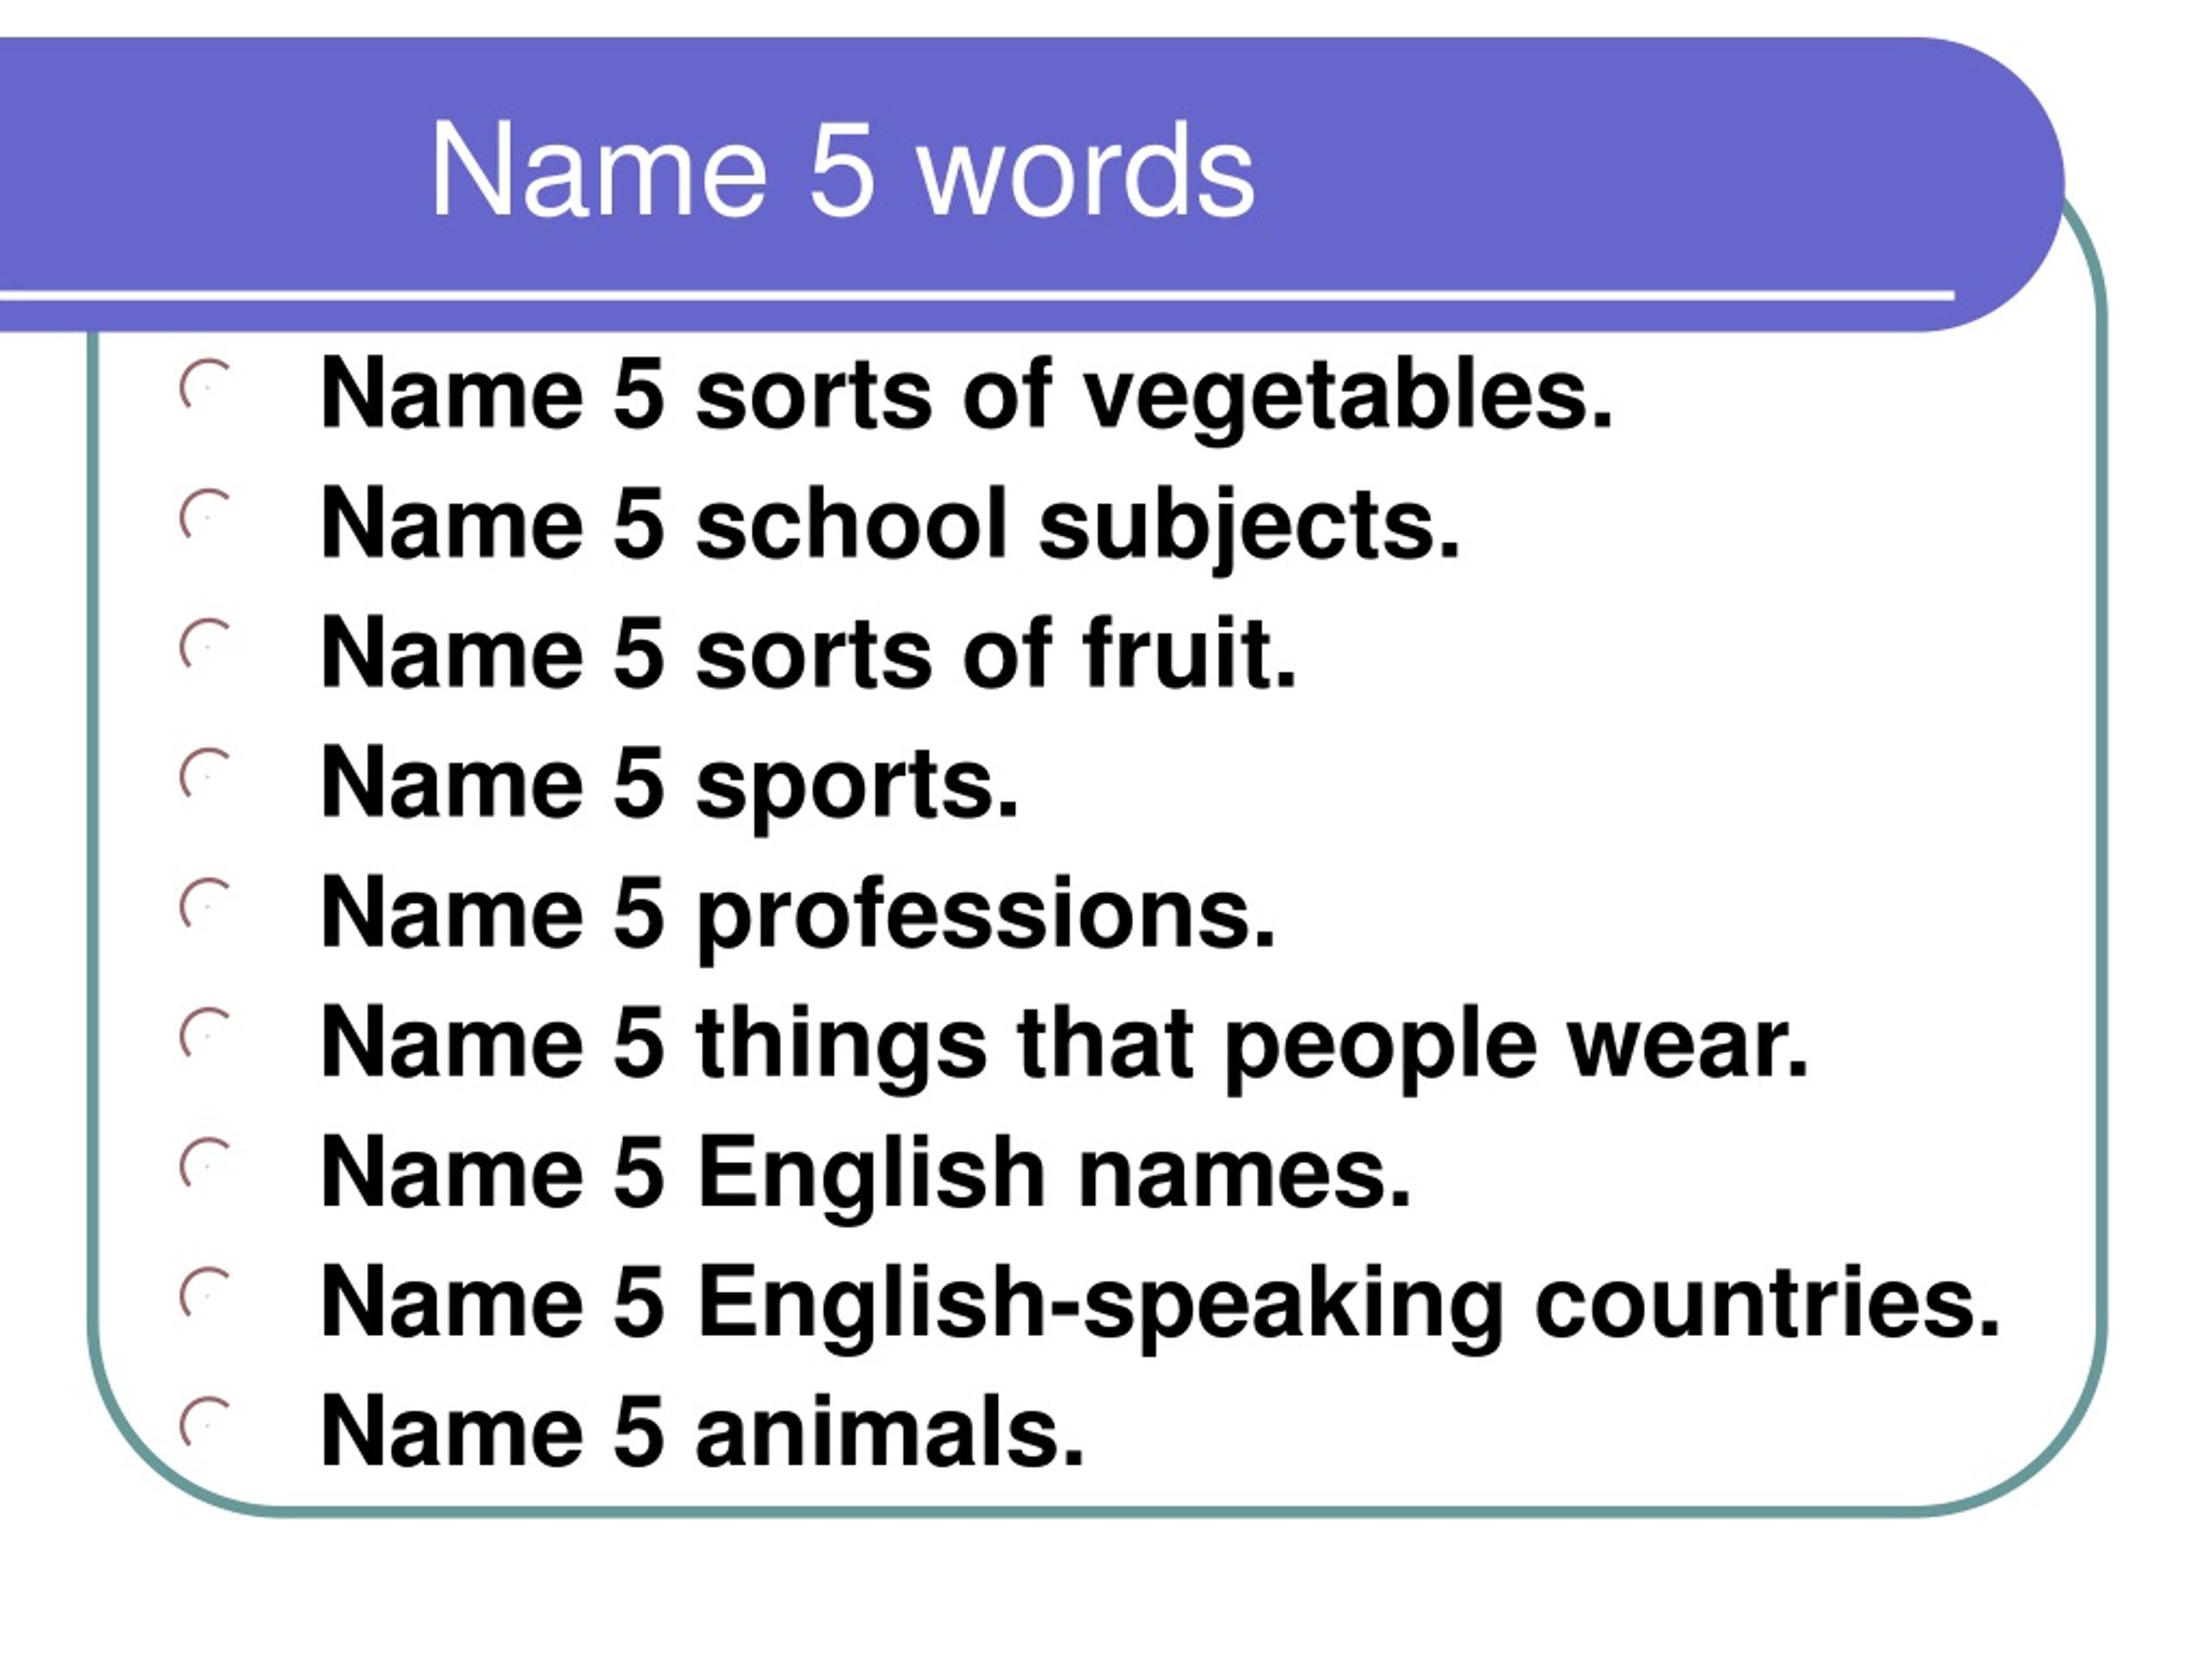 Name 5 game. Warm up для урока английского языка. Warming up на уроке английского языка. Warming up activities на уроках английского языка. Name 5 things.